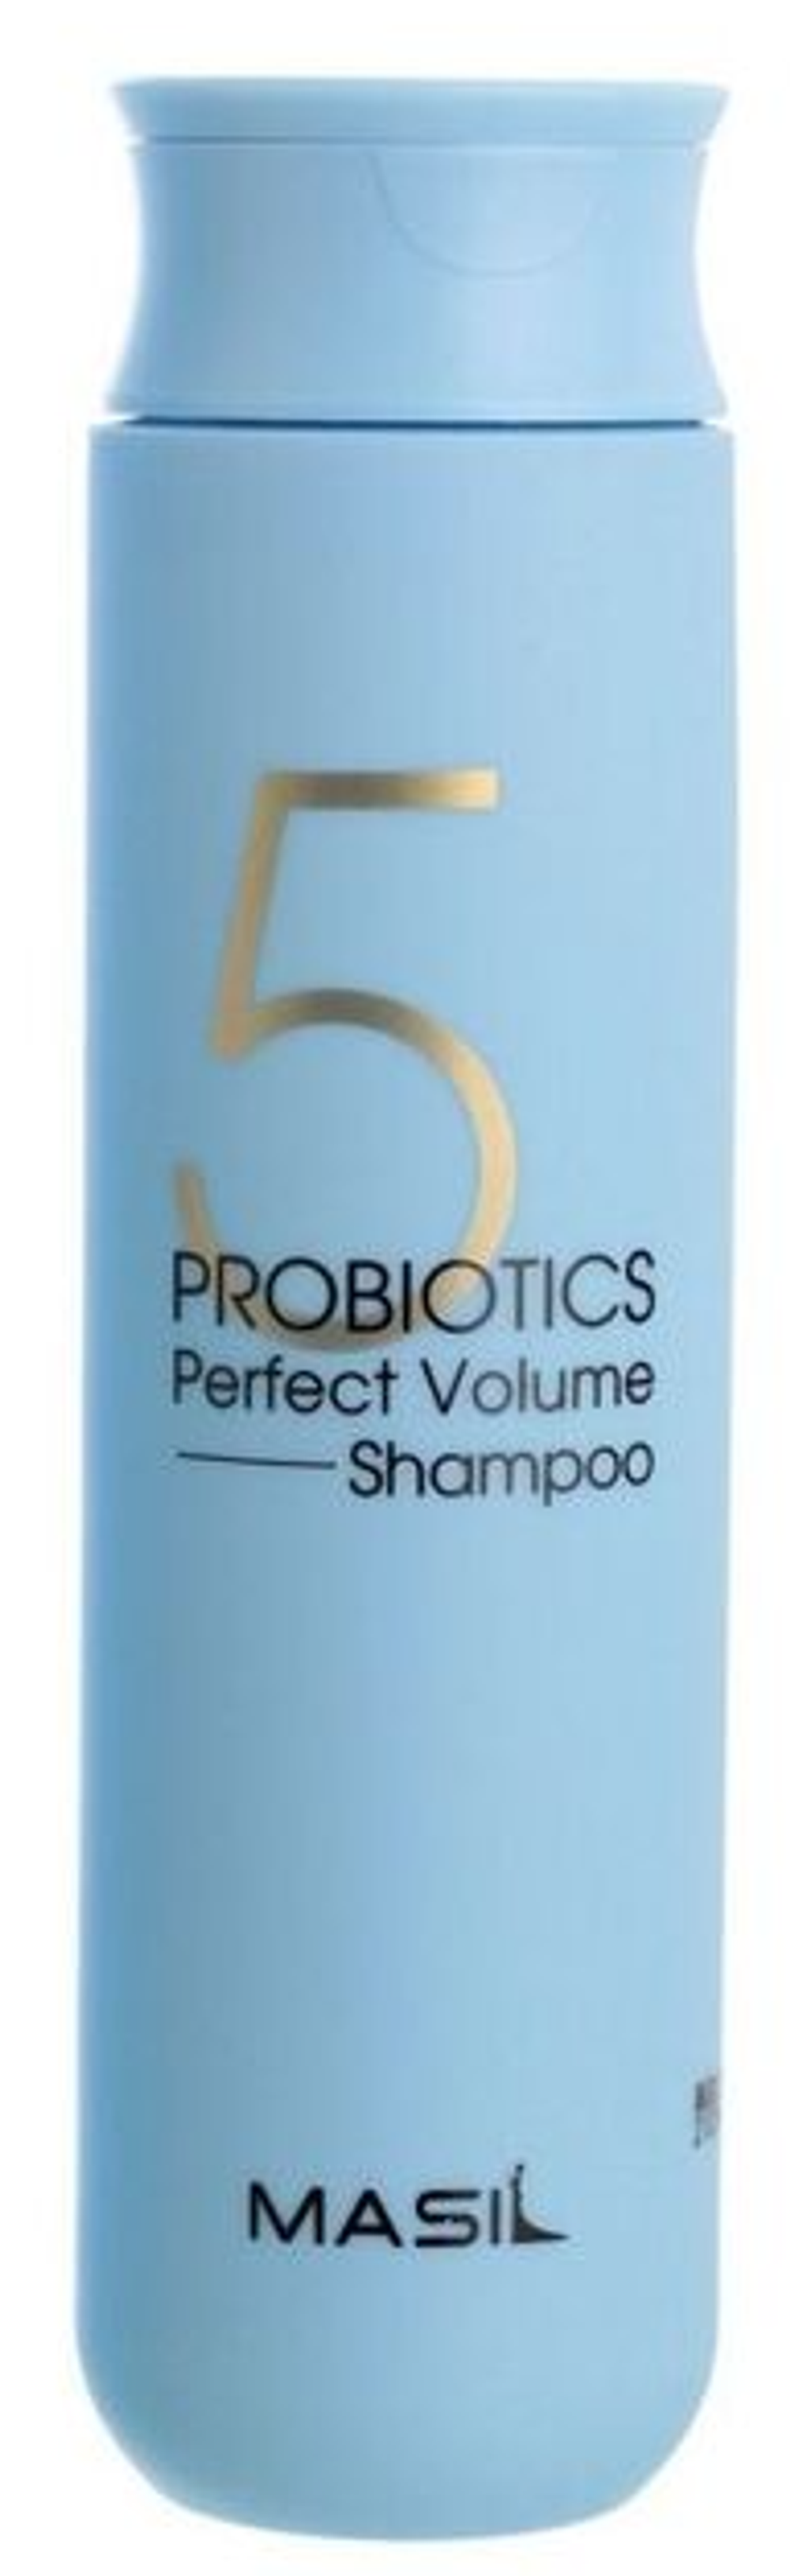 Masil 5 Probiotics Perfect Volume Shampoo шампунь для волос 300мл